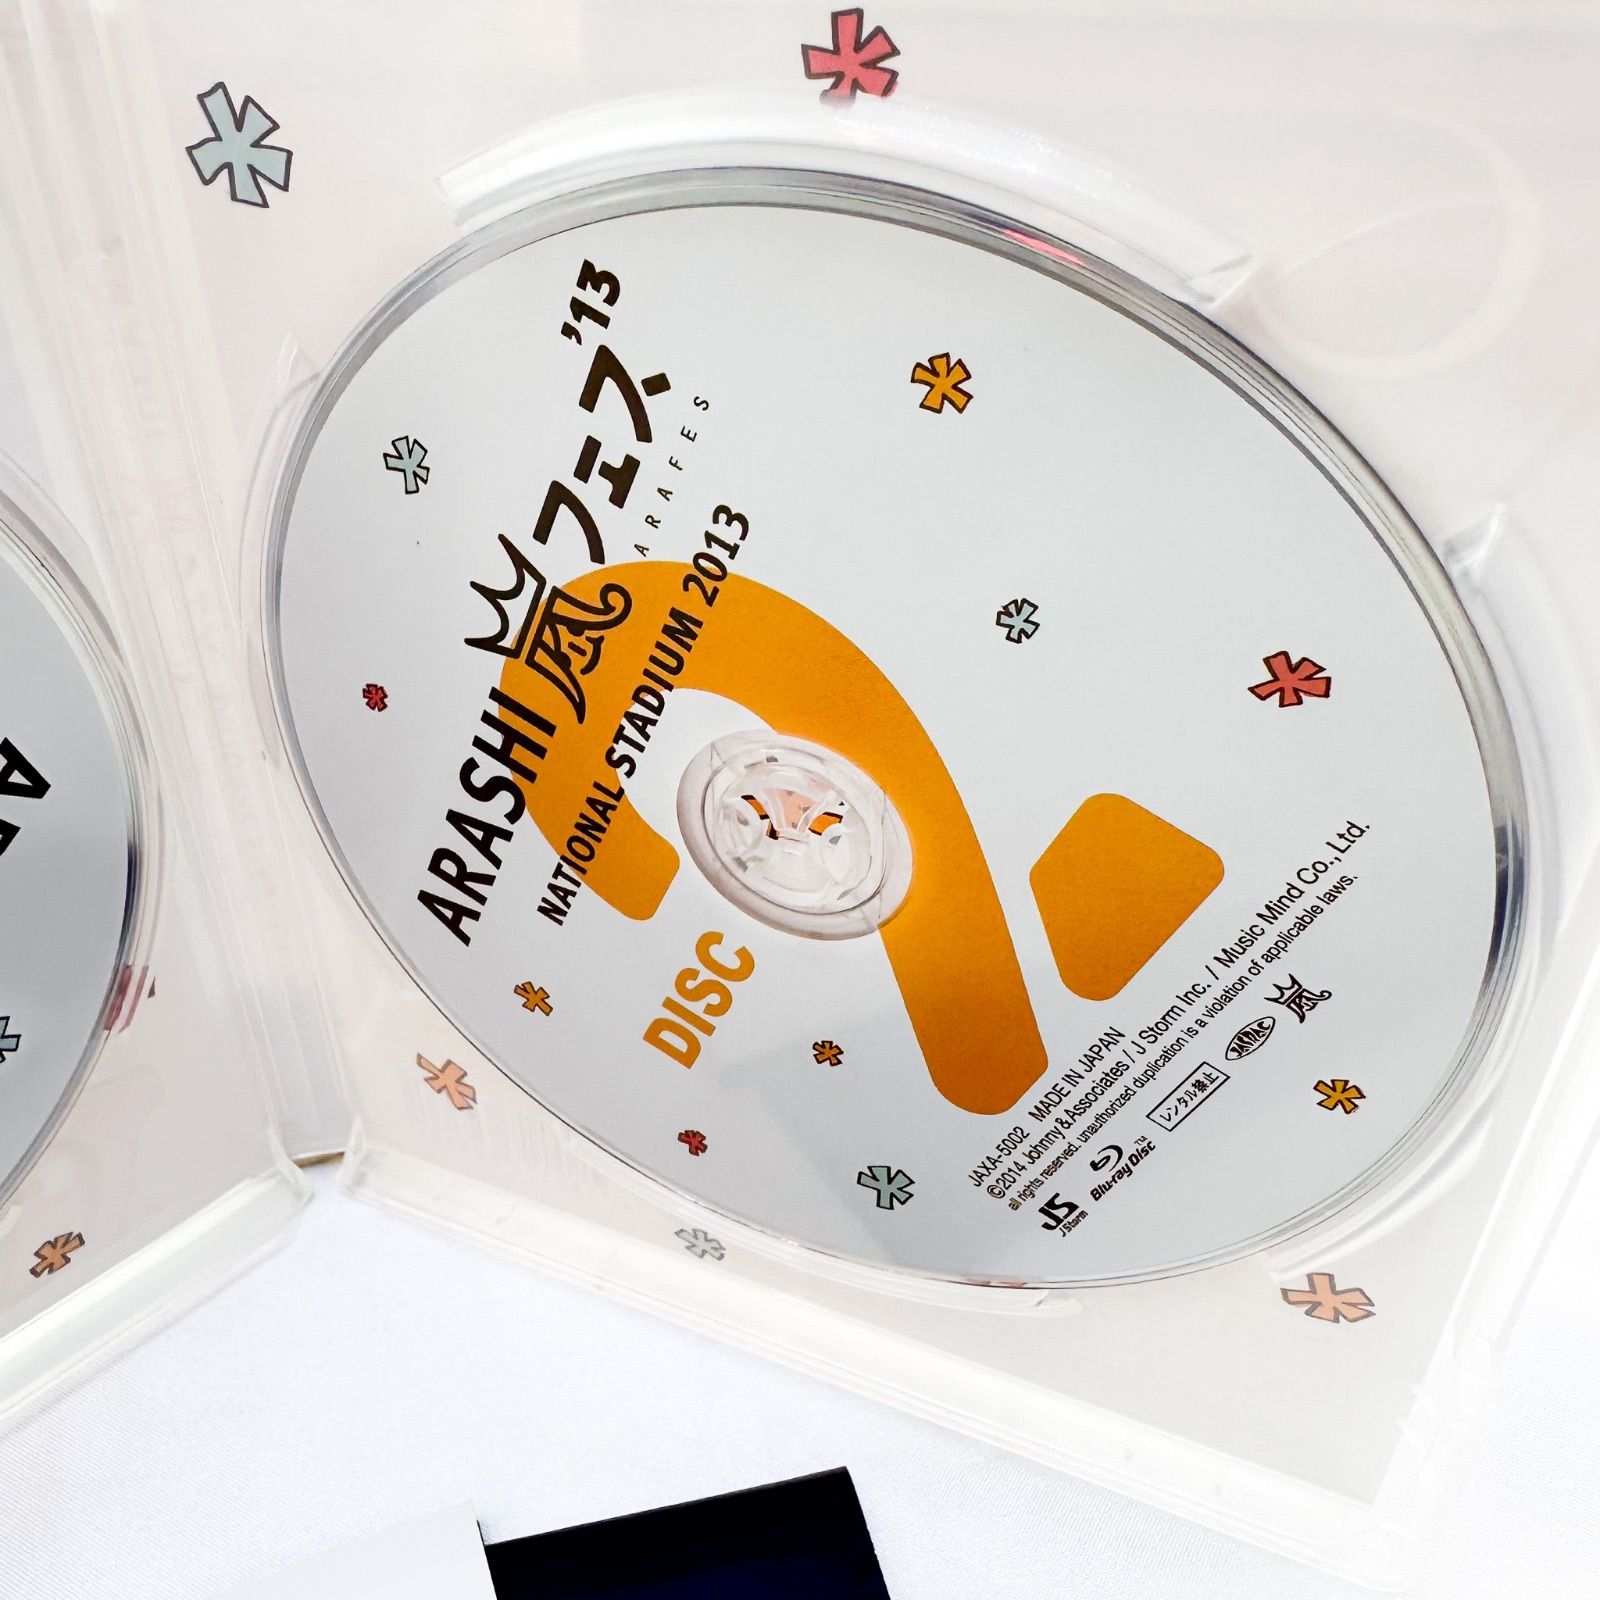 ARASHI アラフェス'13 NATIONAL STADIUM 2013 Blu-ray (B) - メルカリ